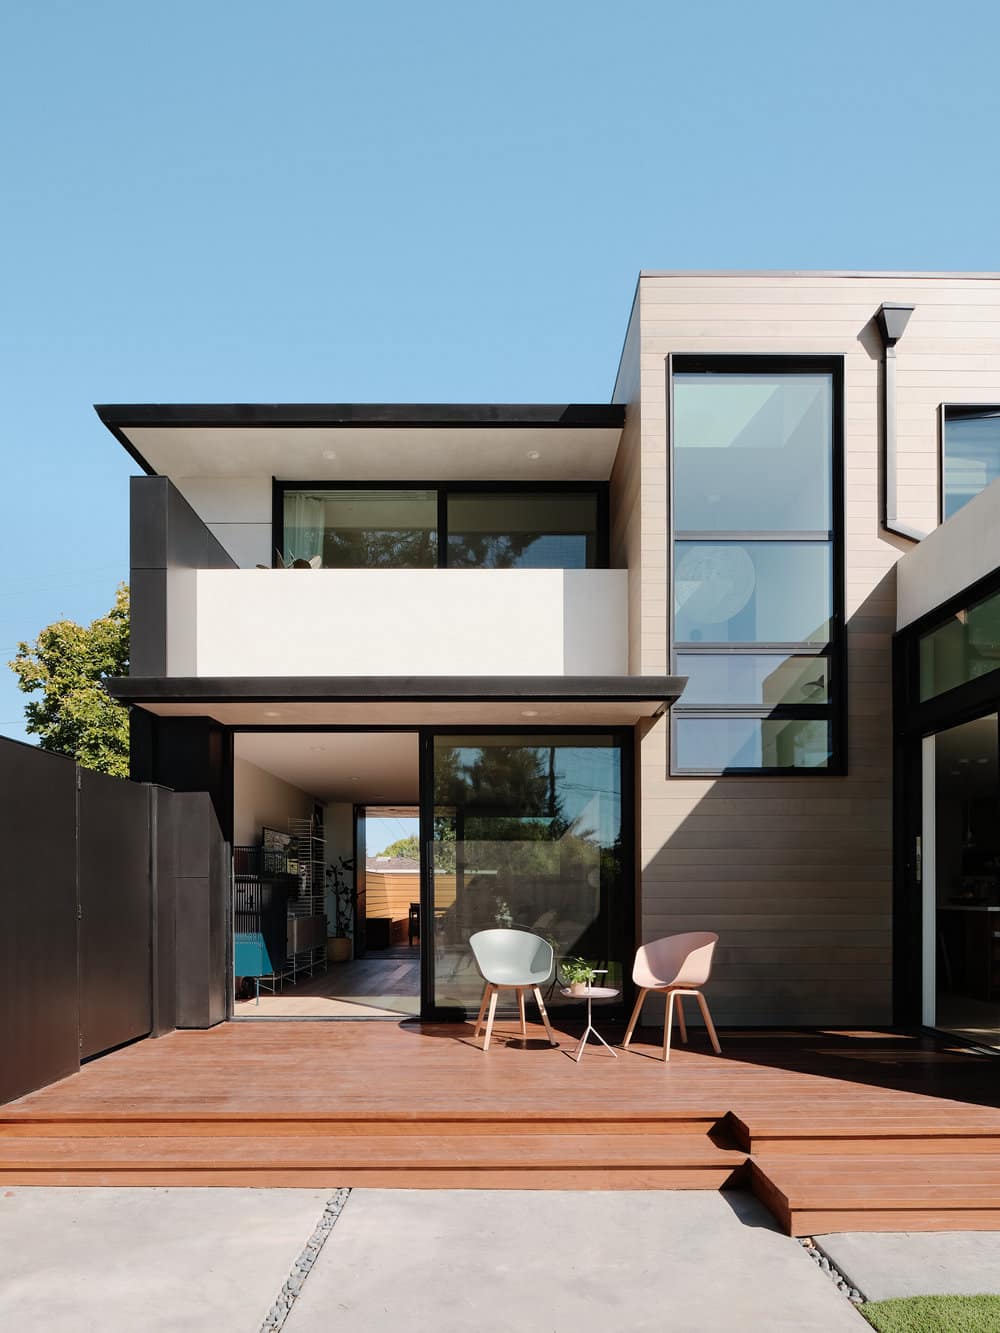 The Jewel Box House by Ogawa Fisher Architects